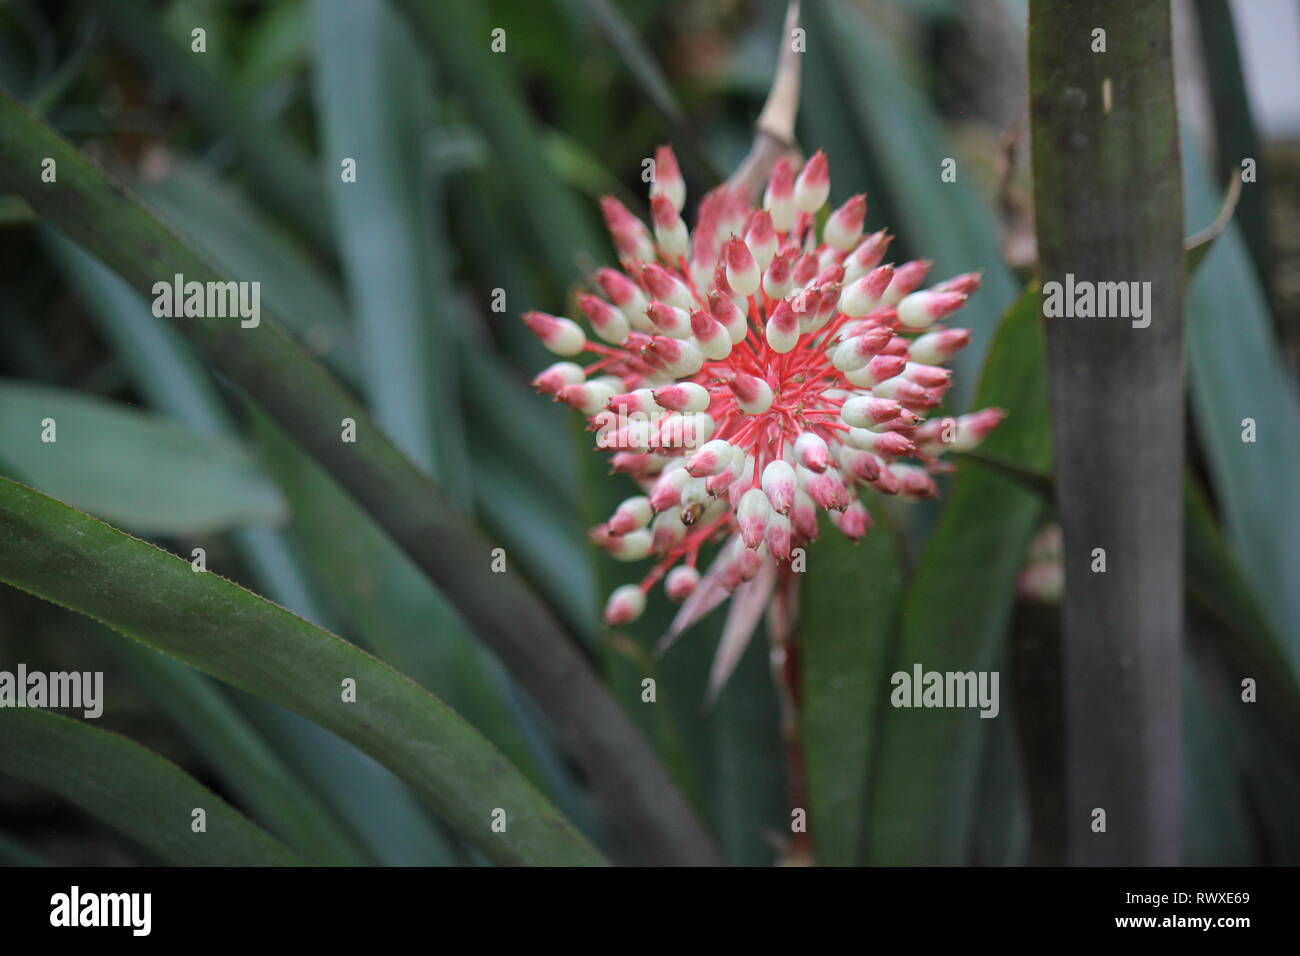 Portea petropolitana, bromeliad, flowering plant. Stock Photo